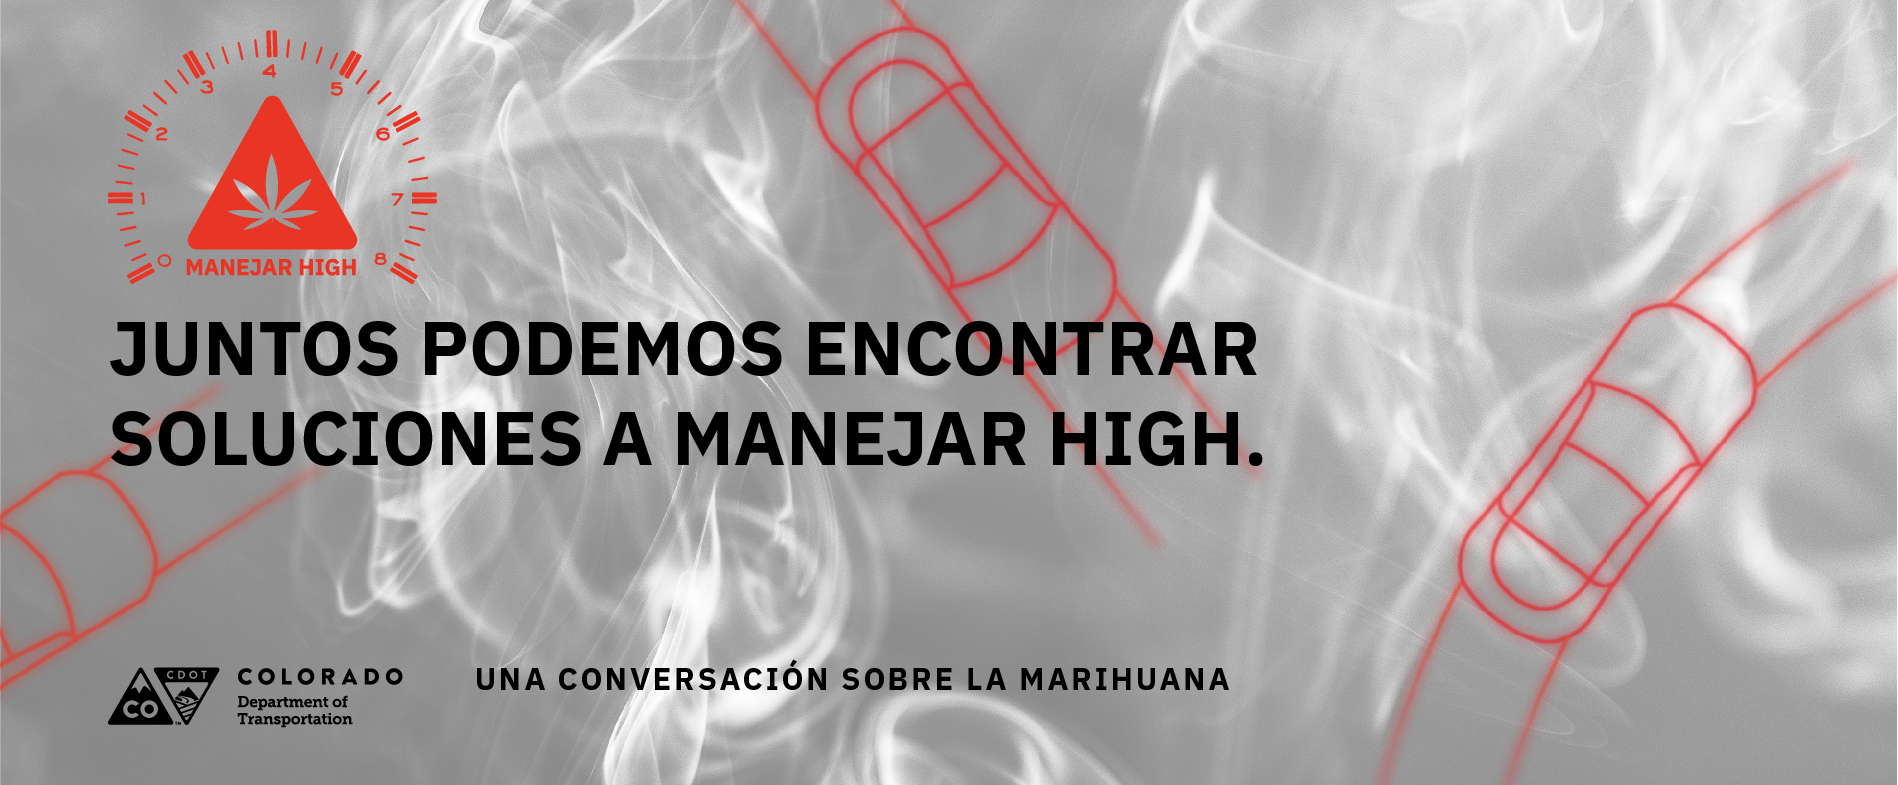 CD038_CannabisConversations_GraphicKit_Mech_v1_Spanish_Horizontal_E.jpg detail image